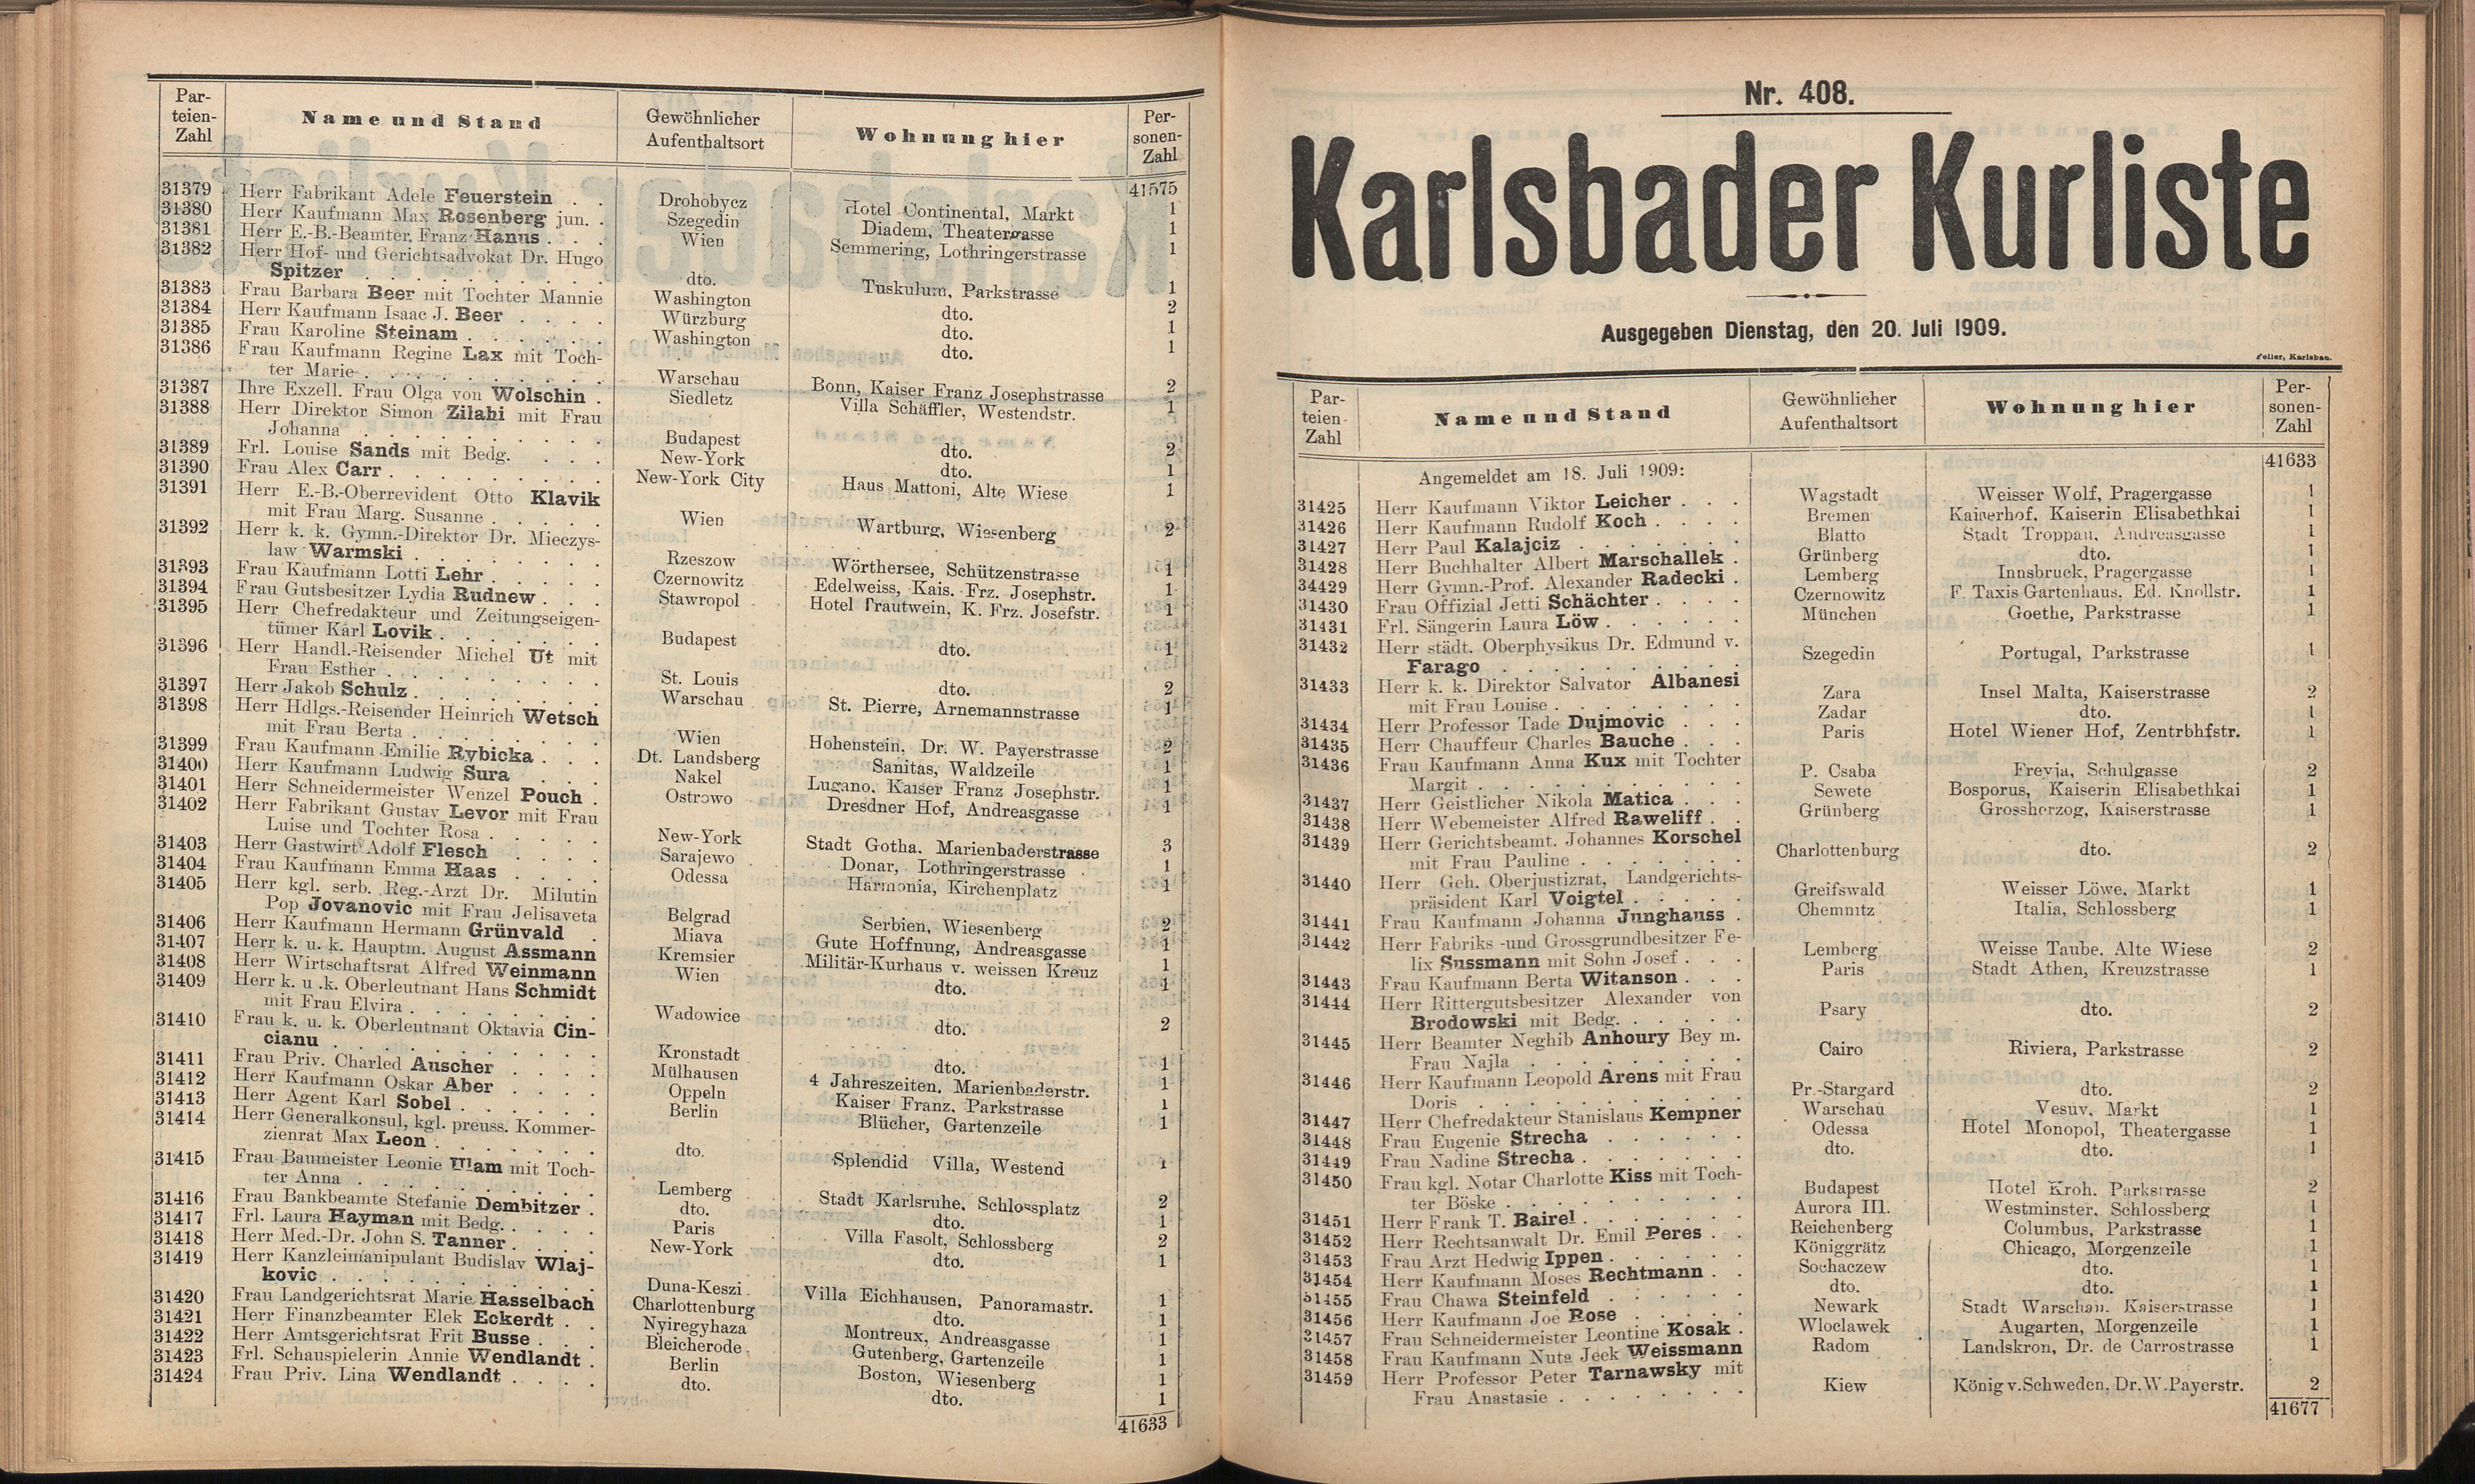 526. soap-kv_knihovna_karlsbader-kurliste-1909_5260